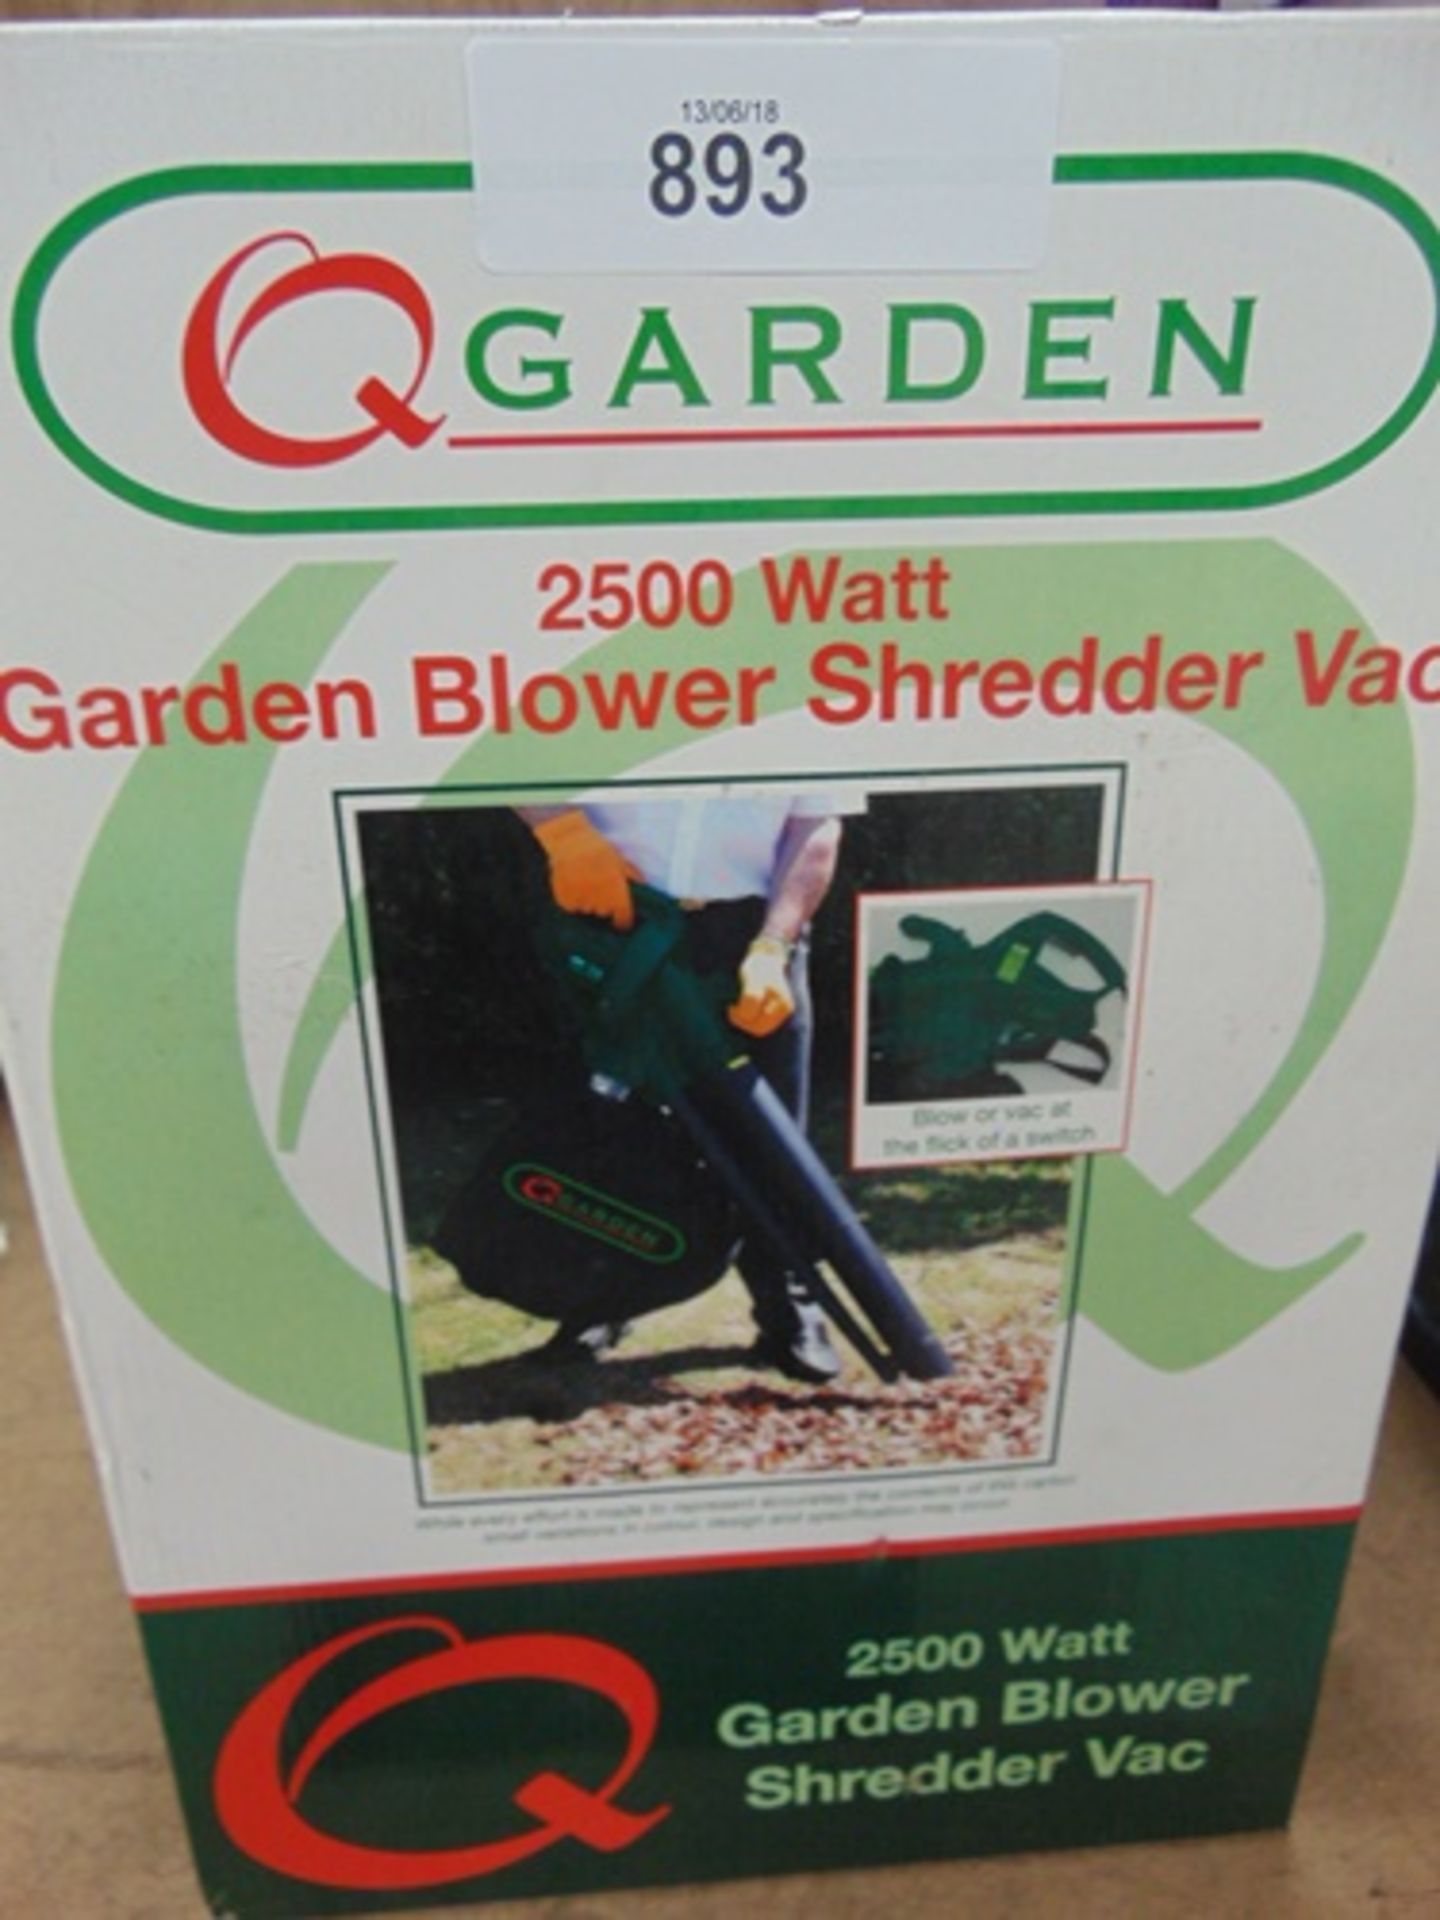 1 x Qgarden, 2500W, garden blower, shredder vac, Code QGBV2500 - New in box (Bay11)